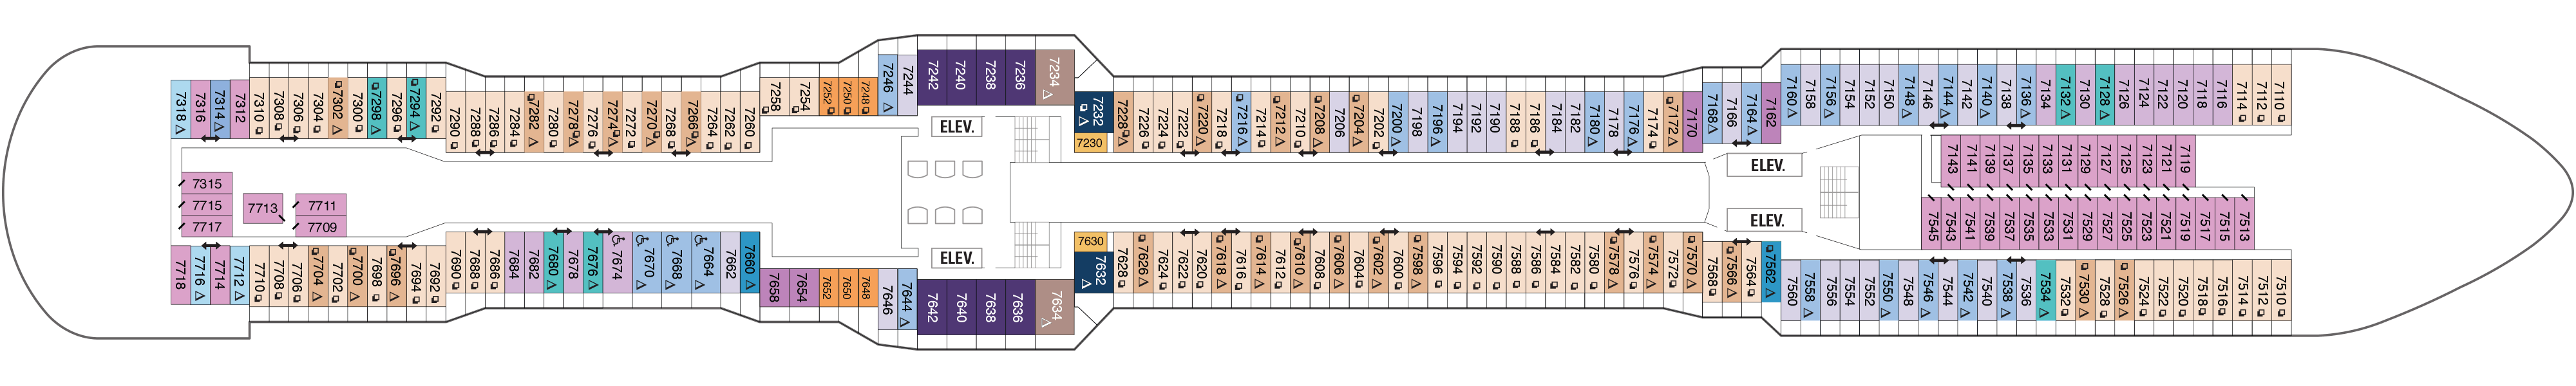 Ovation of the Seas - Royal Caribbean International - Deck 7